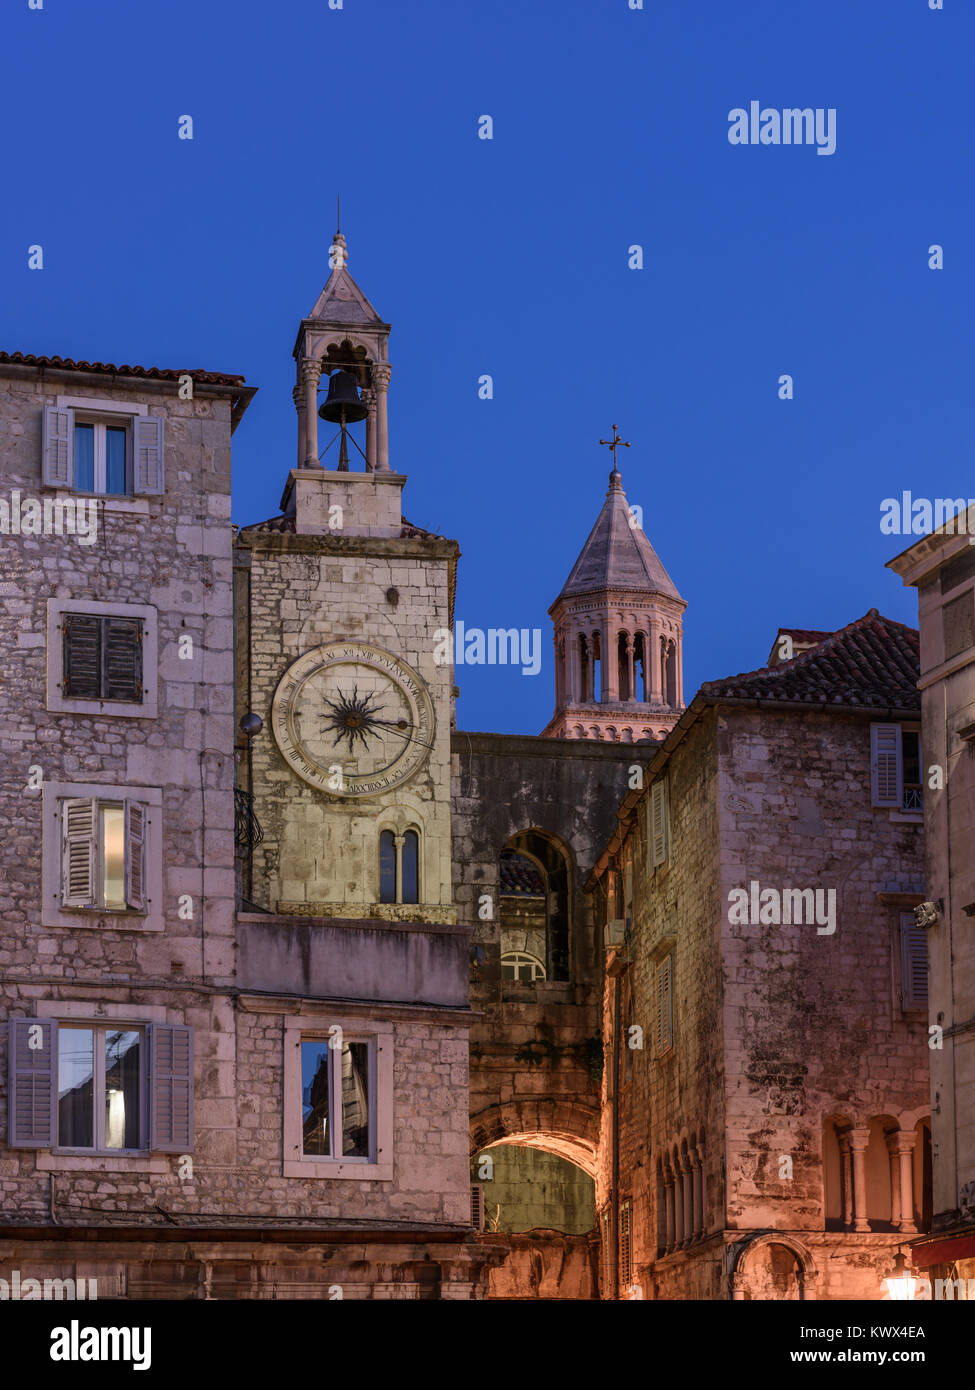 Ispod ure Zvonik/Bell Tower sous l'horloge, Split, Croatie Banque D'Images